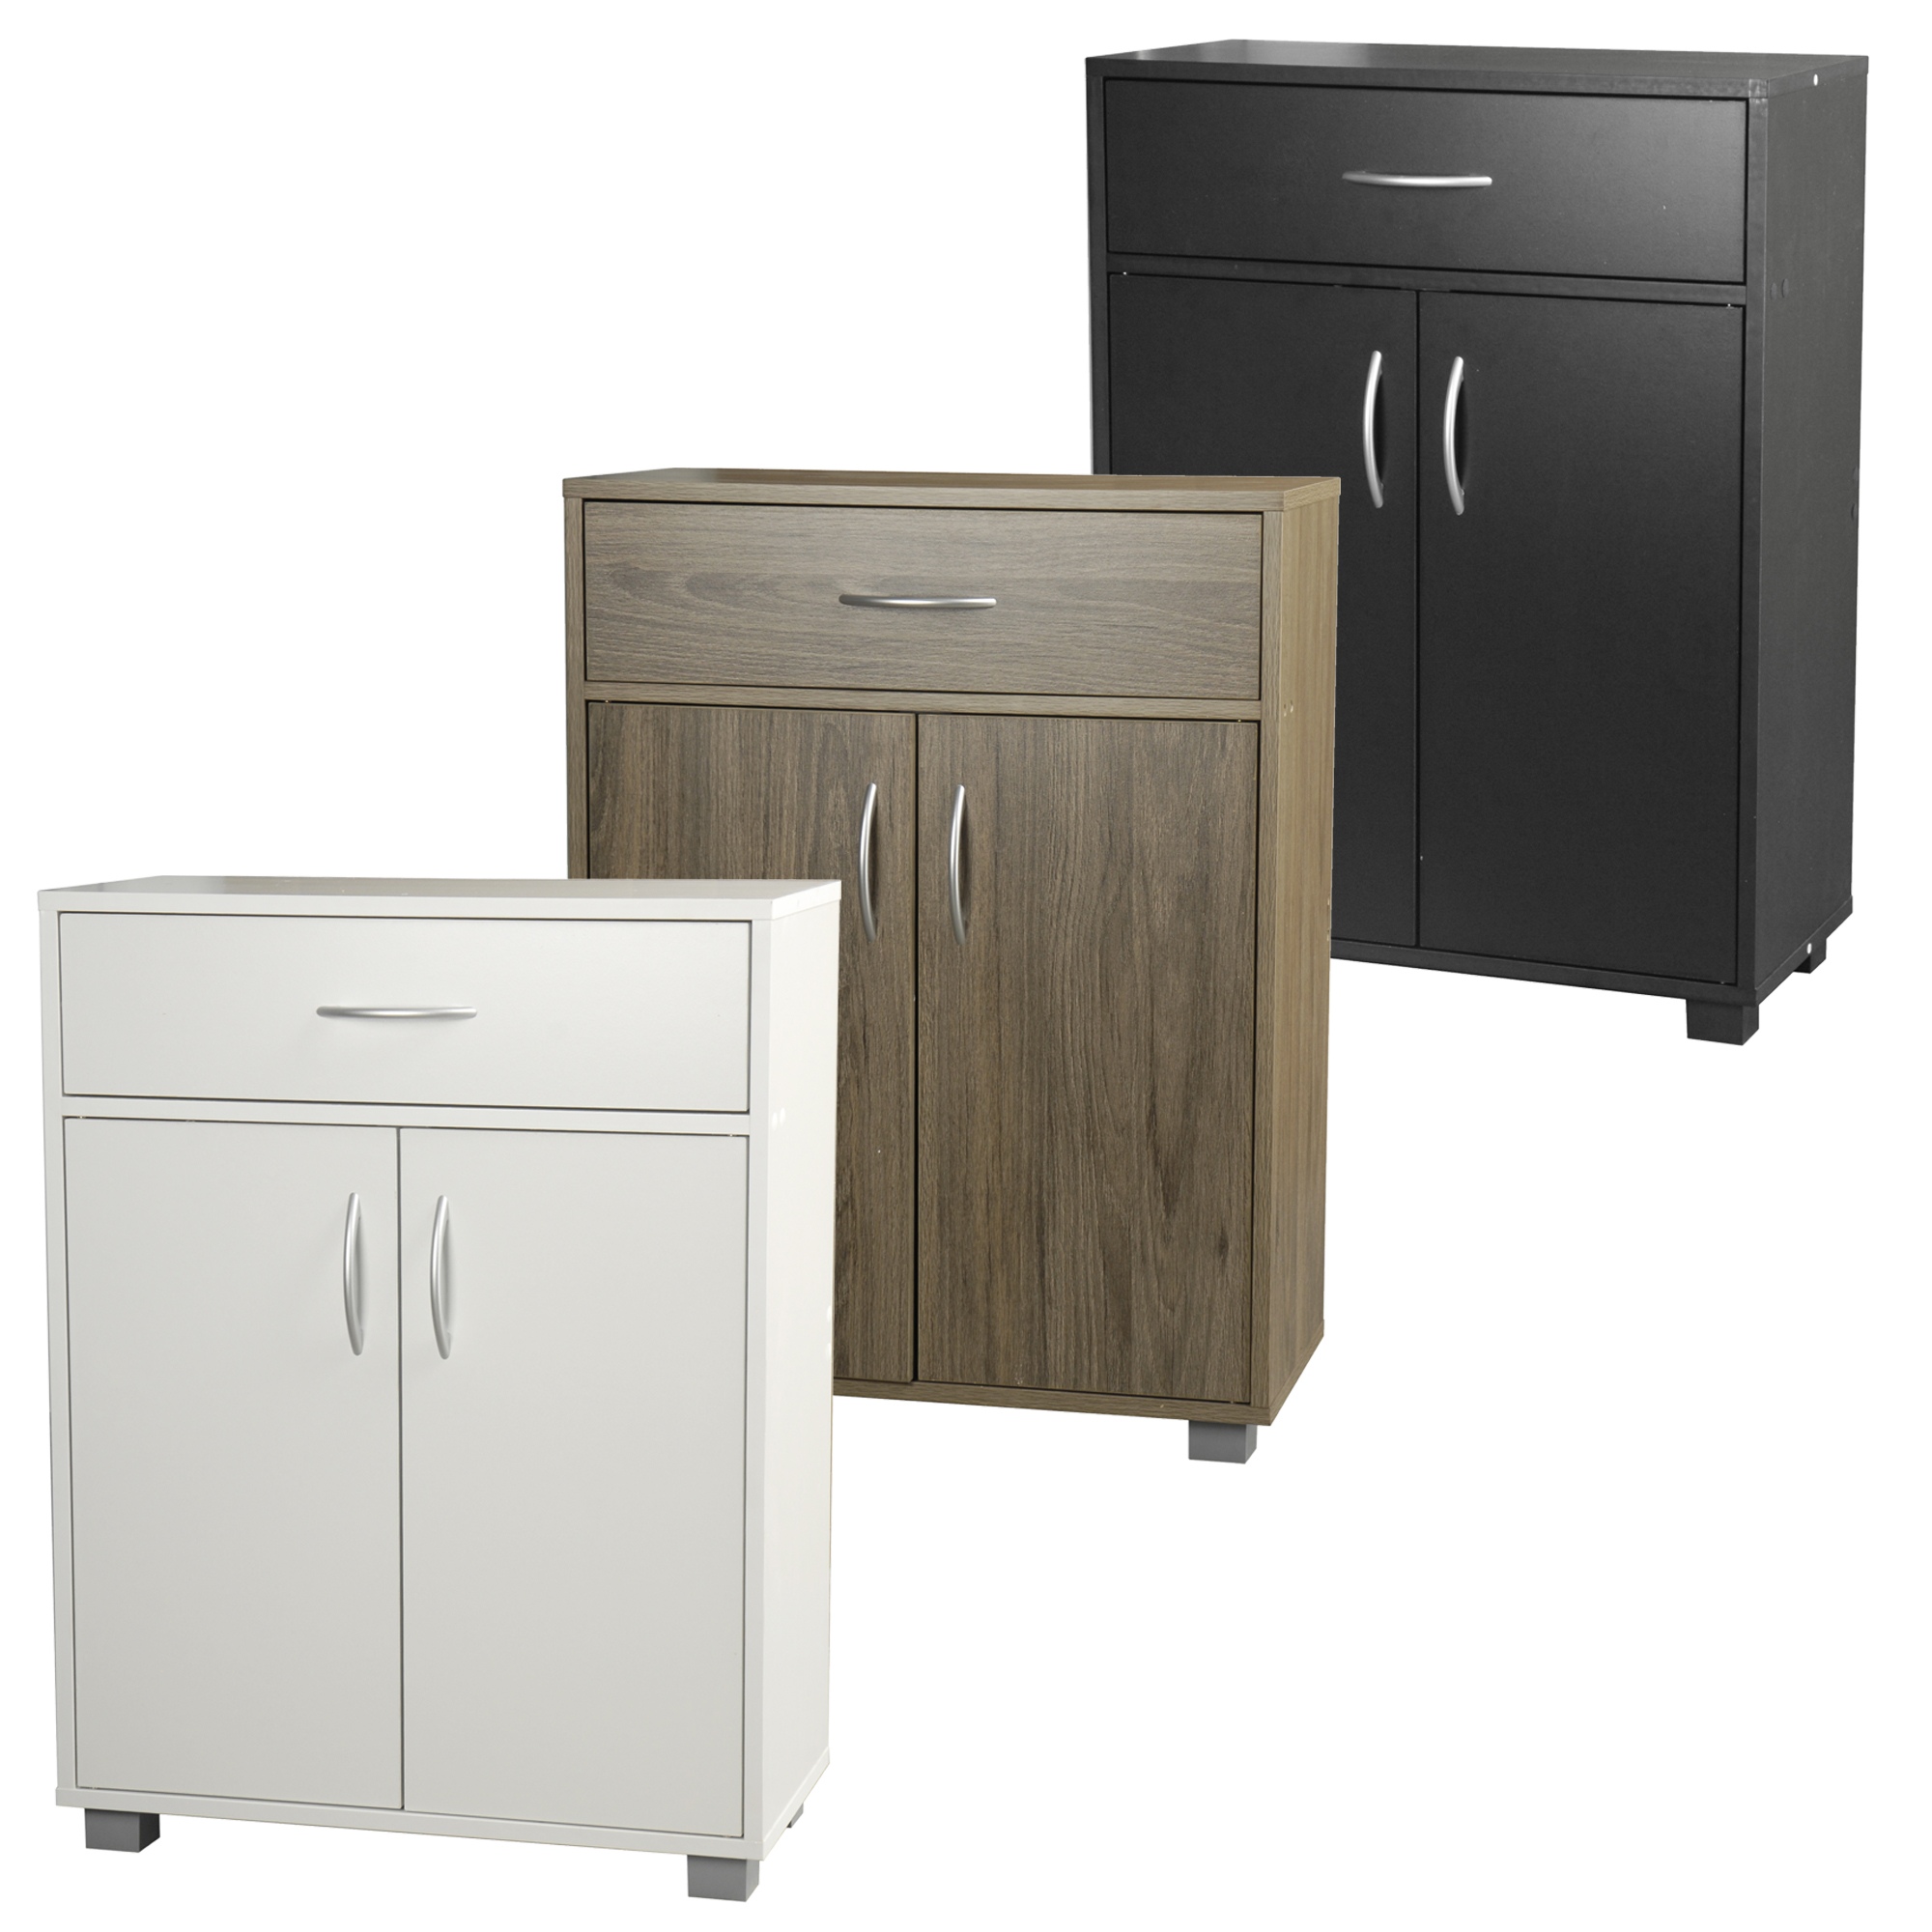 Oak URBNLIVING Wooden Free Standing Storage Cabinet 